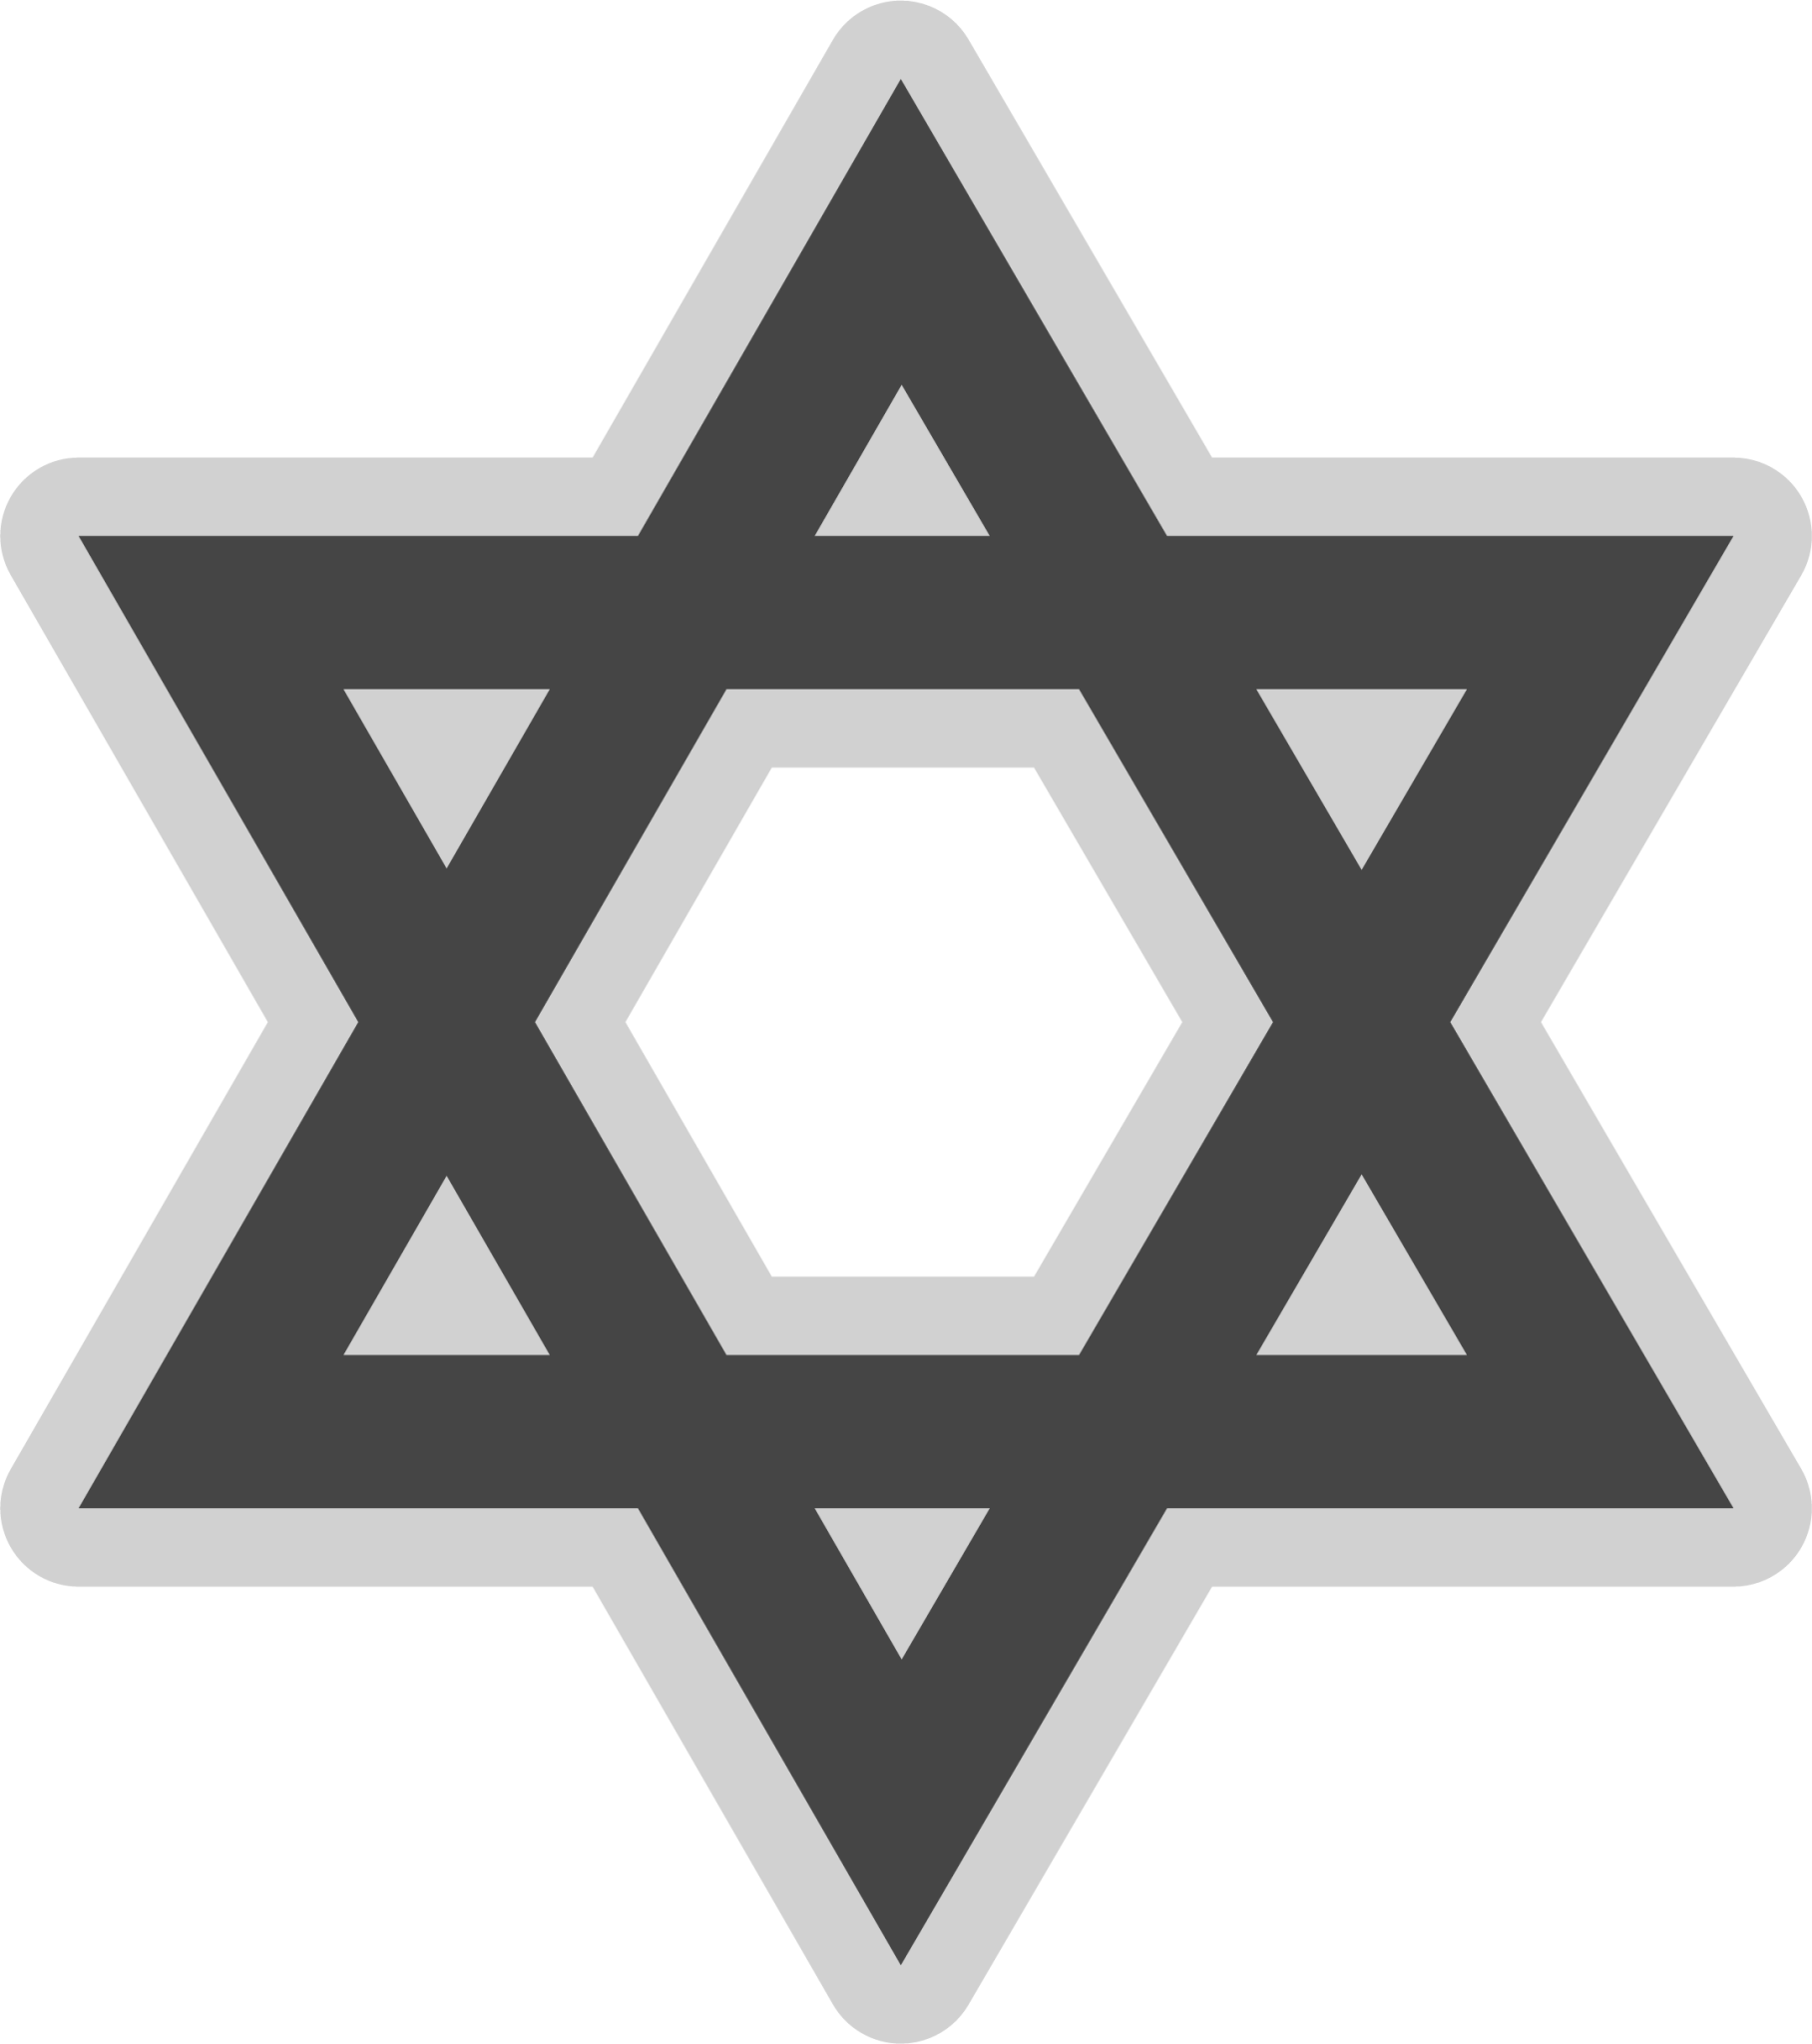 judaism icon